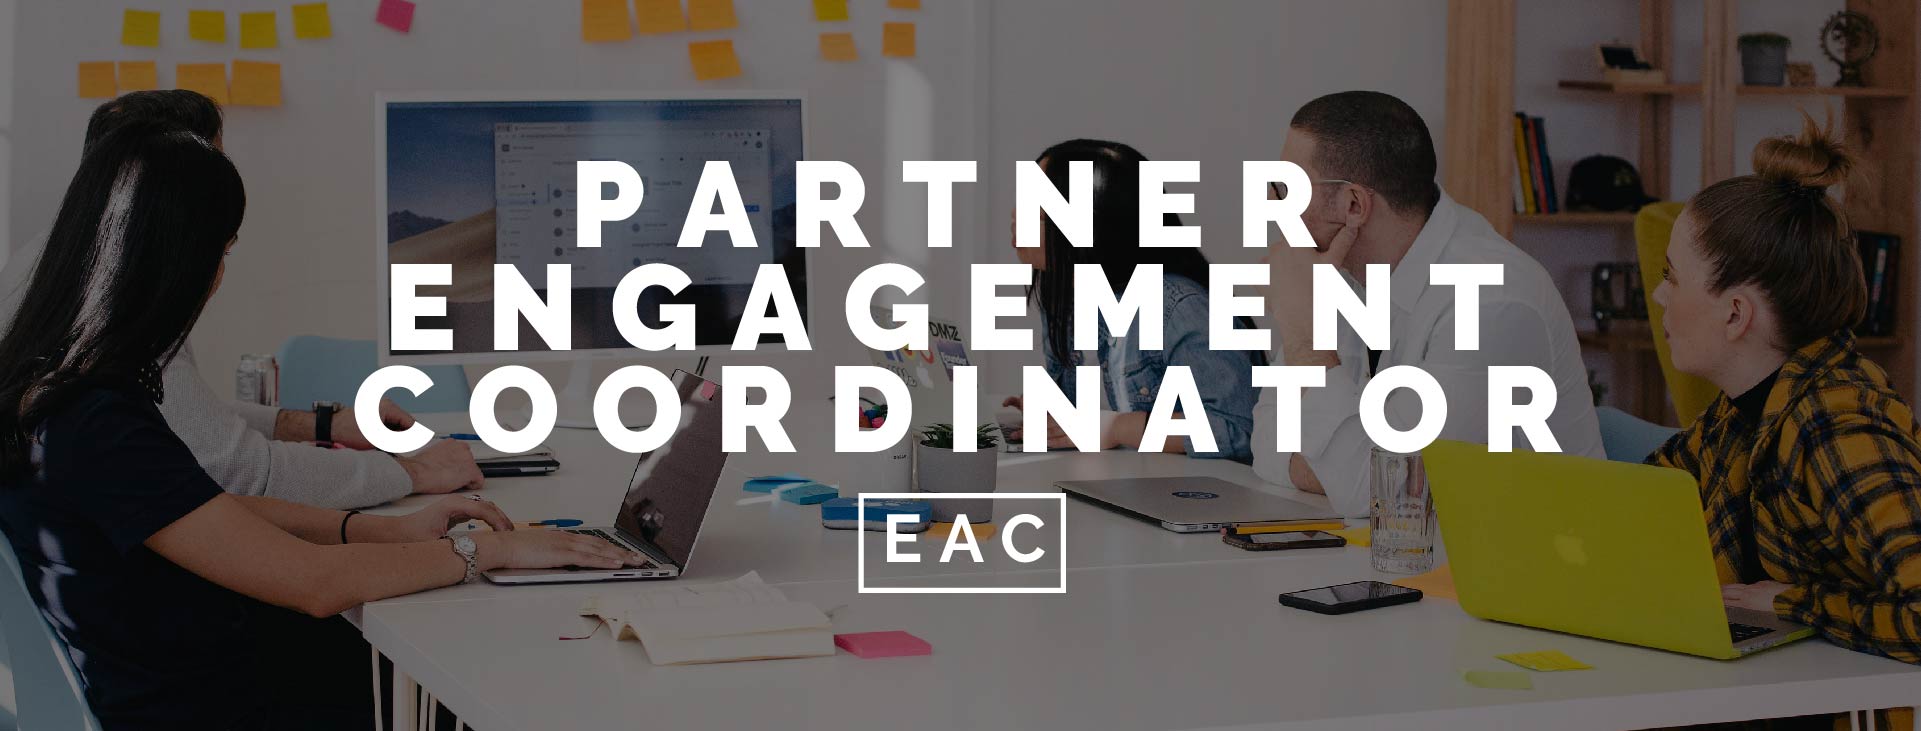 Partner Engagement Coordinator